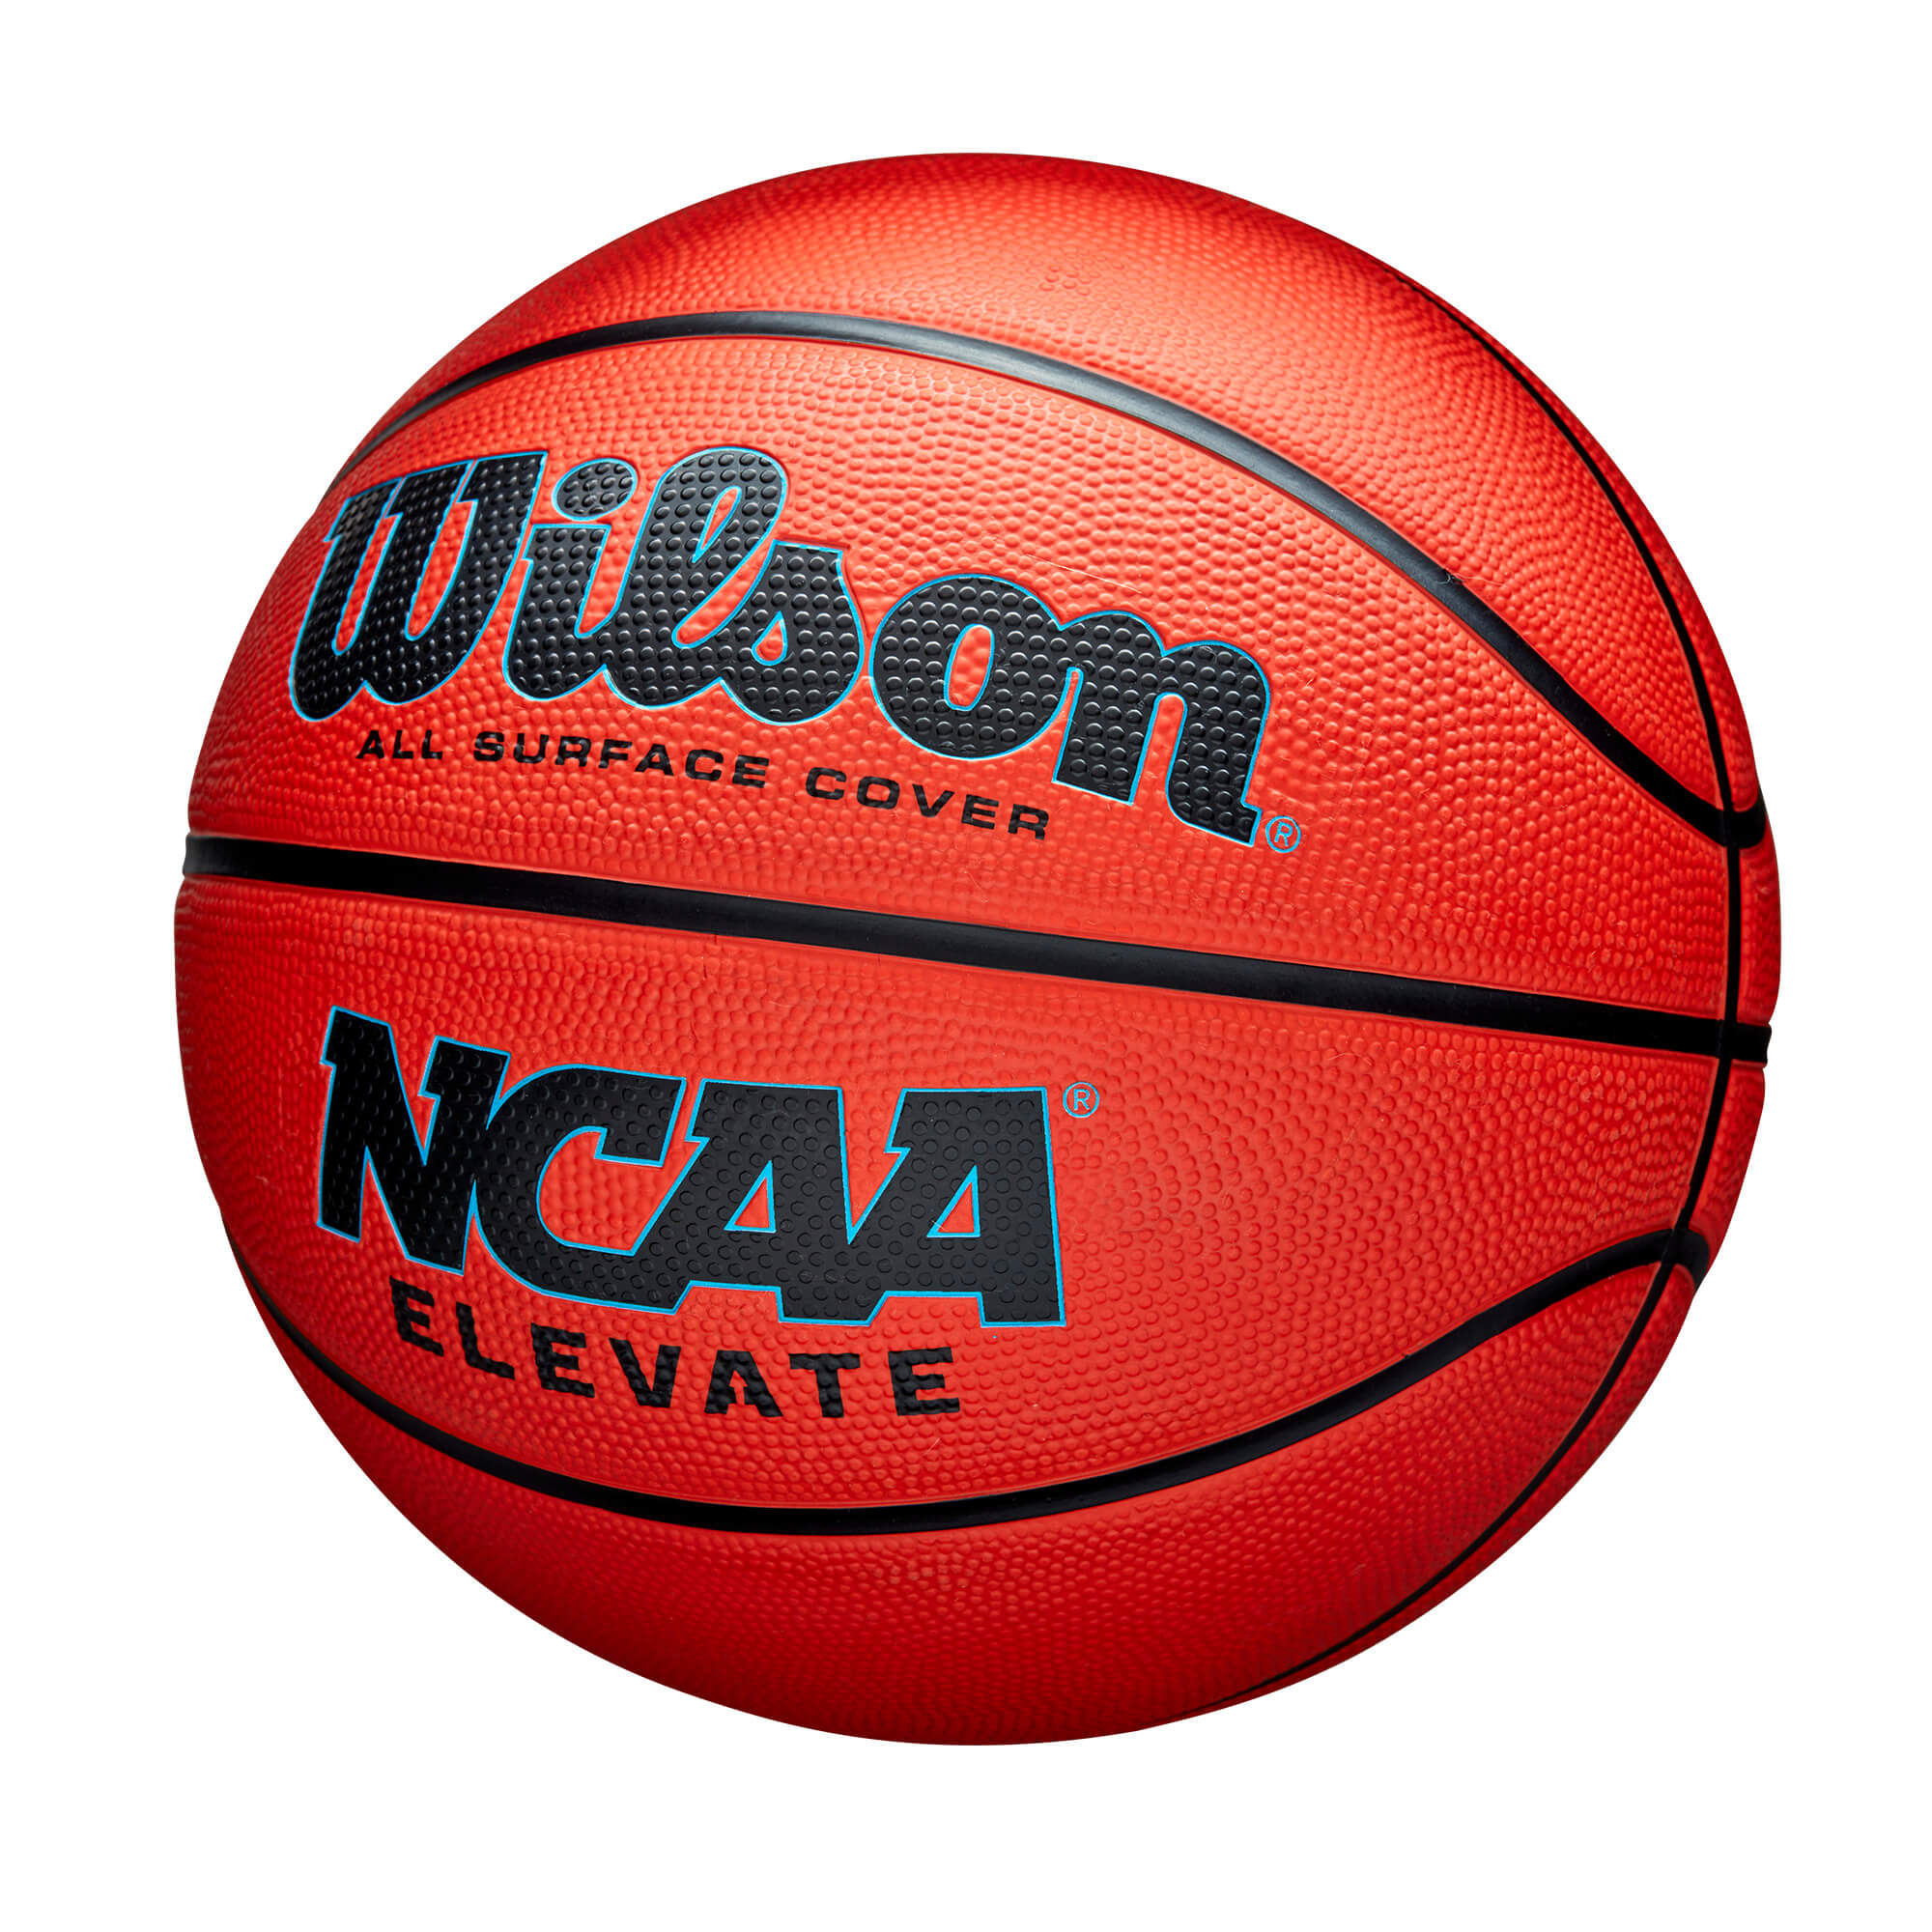 Ballons de basket NCAA Elevate classic